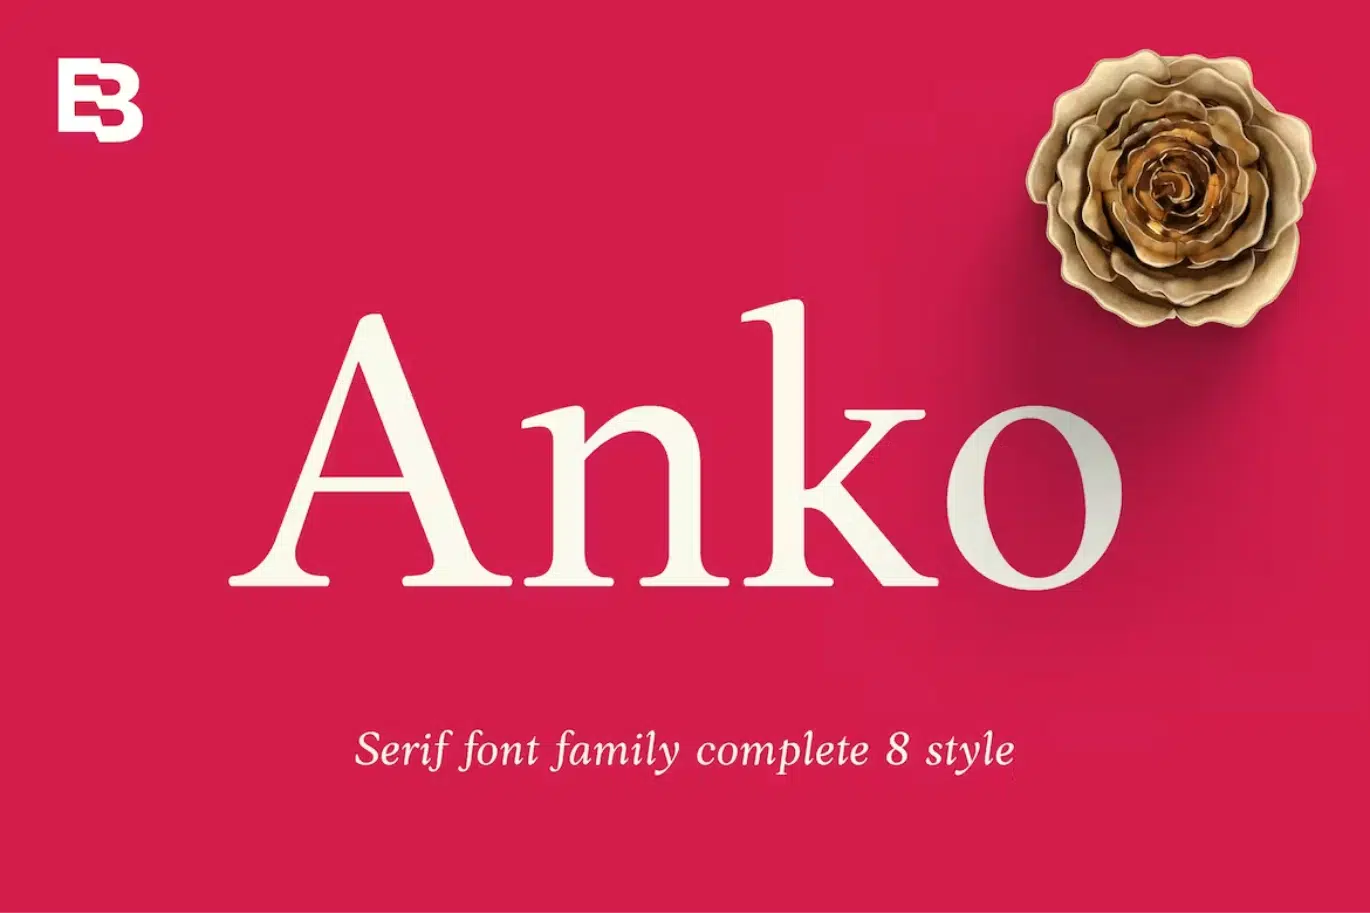 Anko Font Similar To Garamond